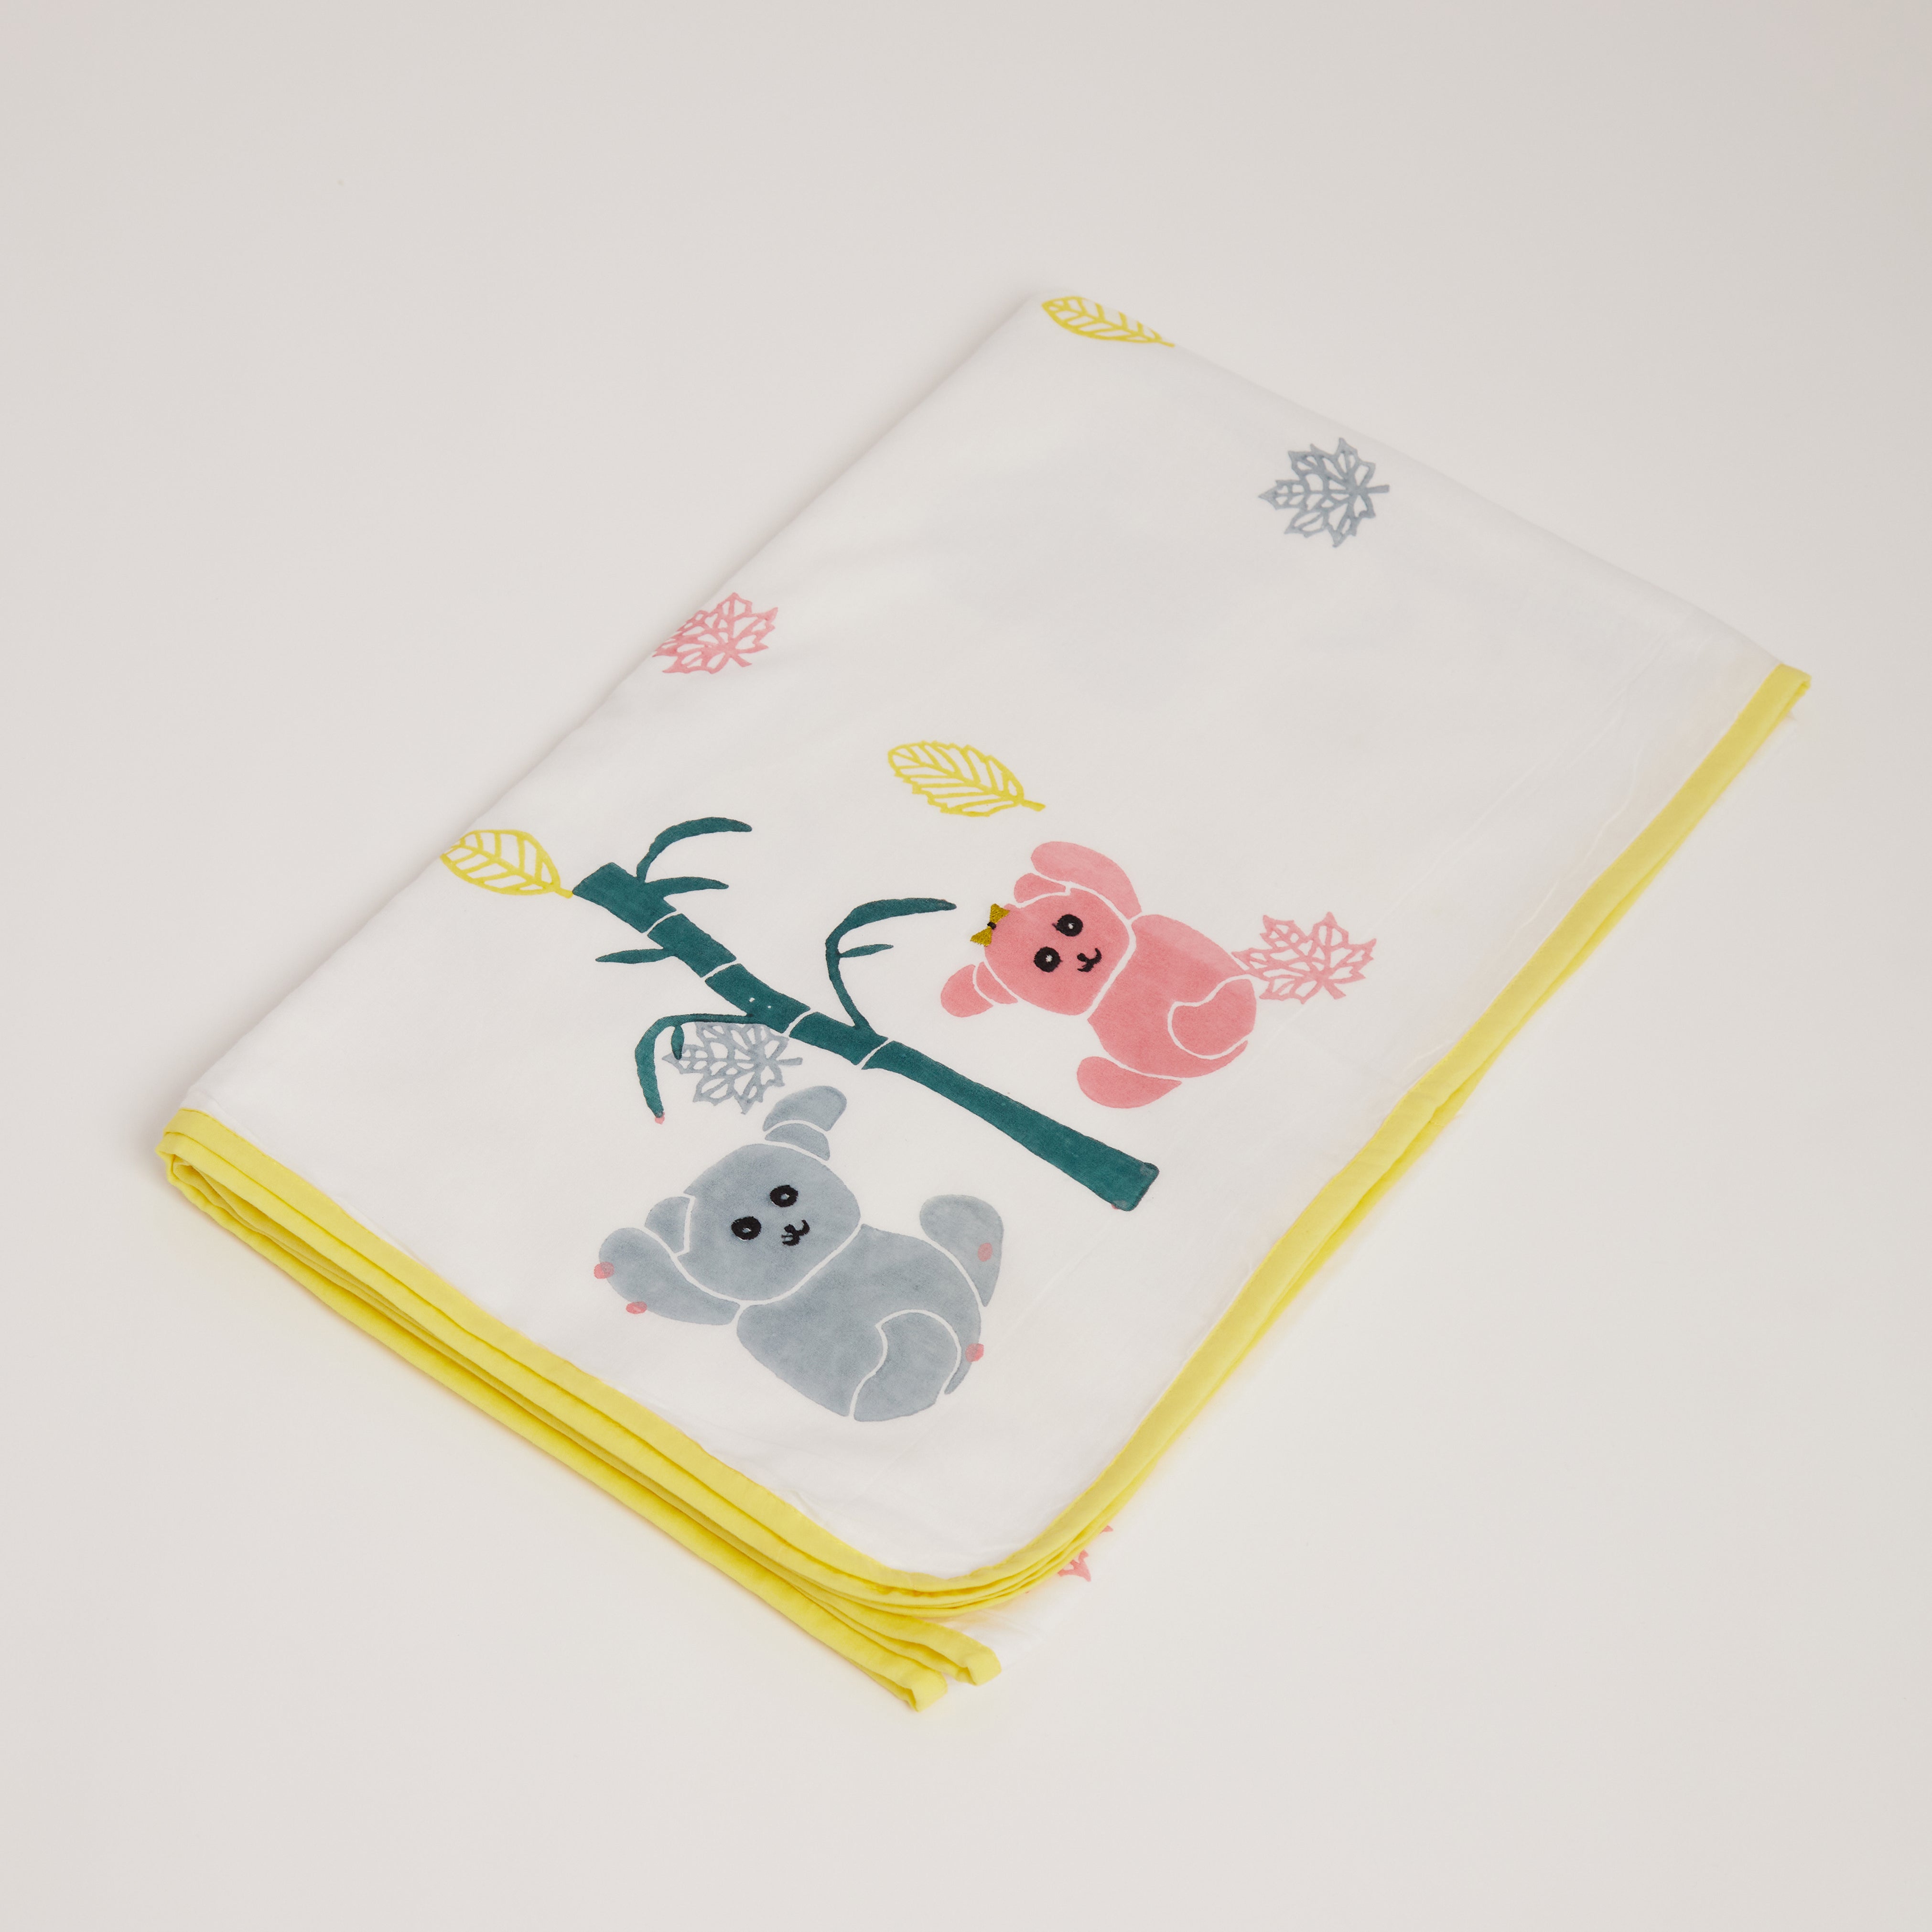 Masaya Cot Bedding Set- K for Koala - Yellow